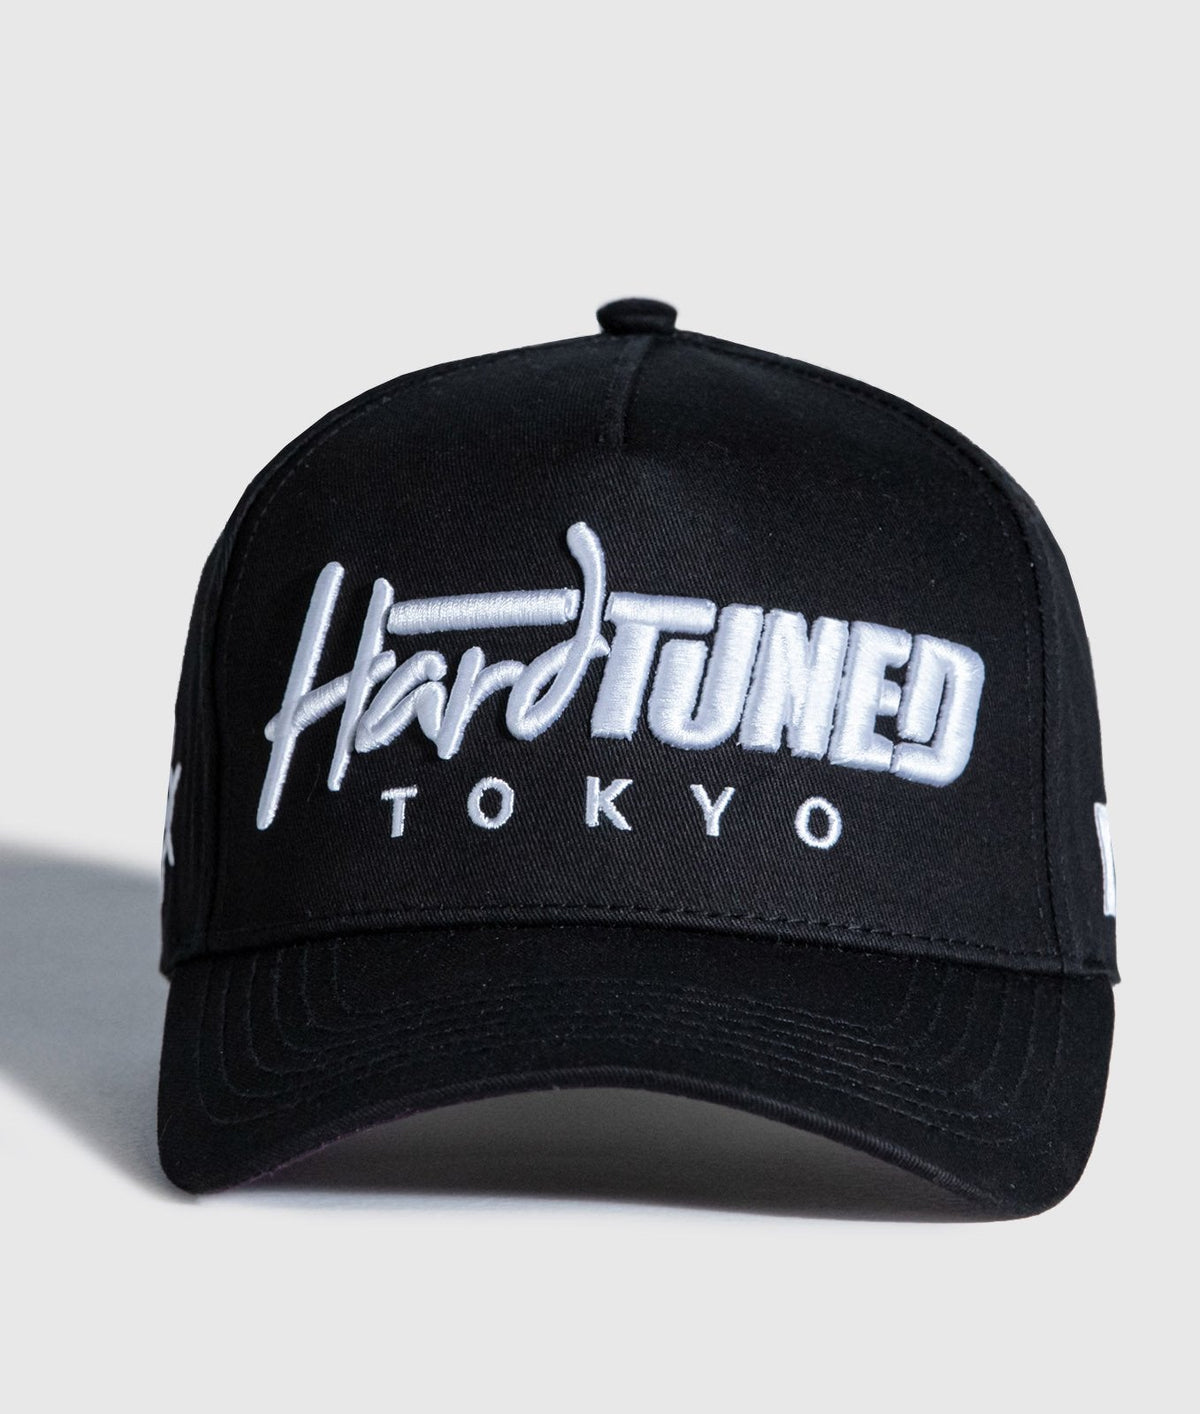 Hardtuned Tokyo Black A-Frame Cap